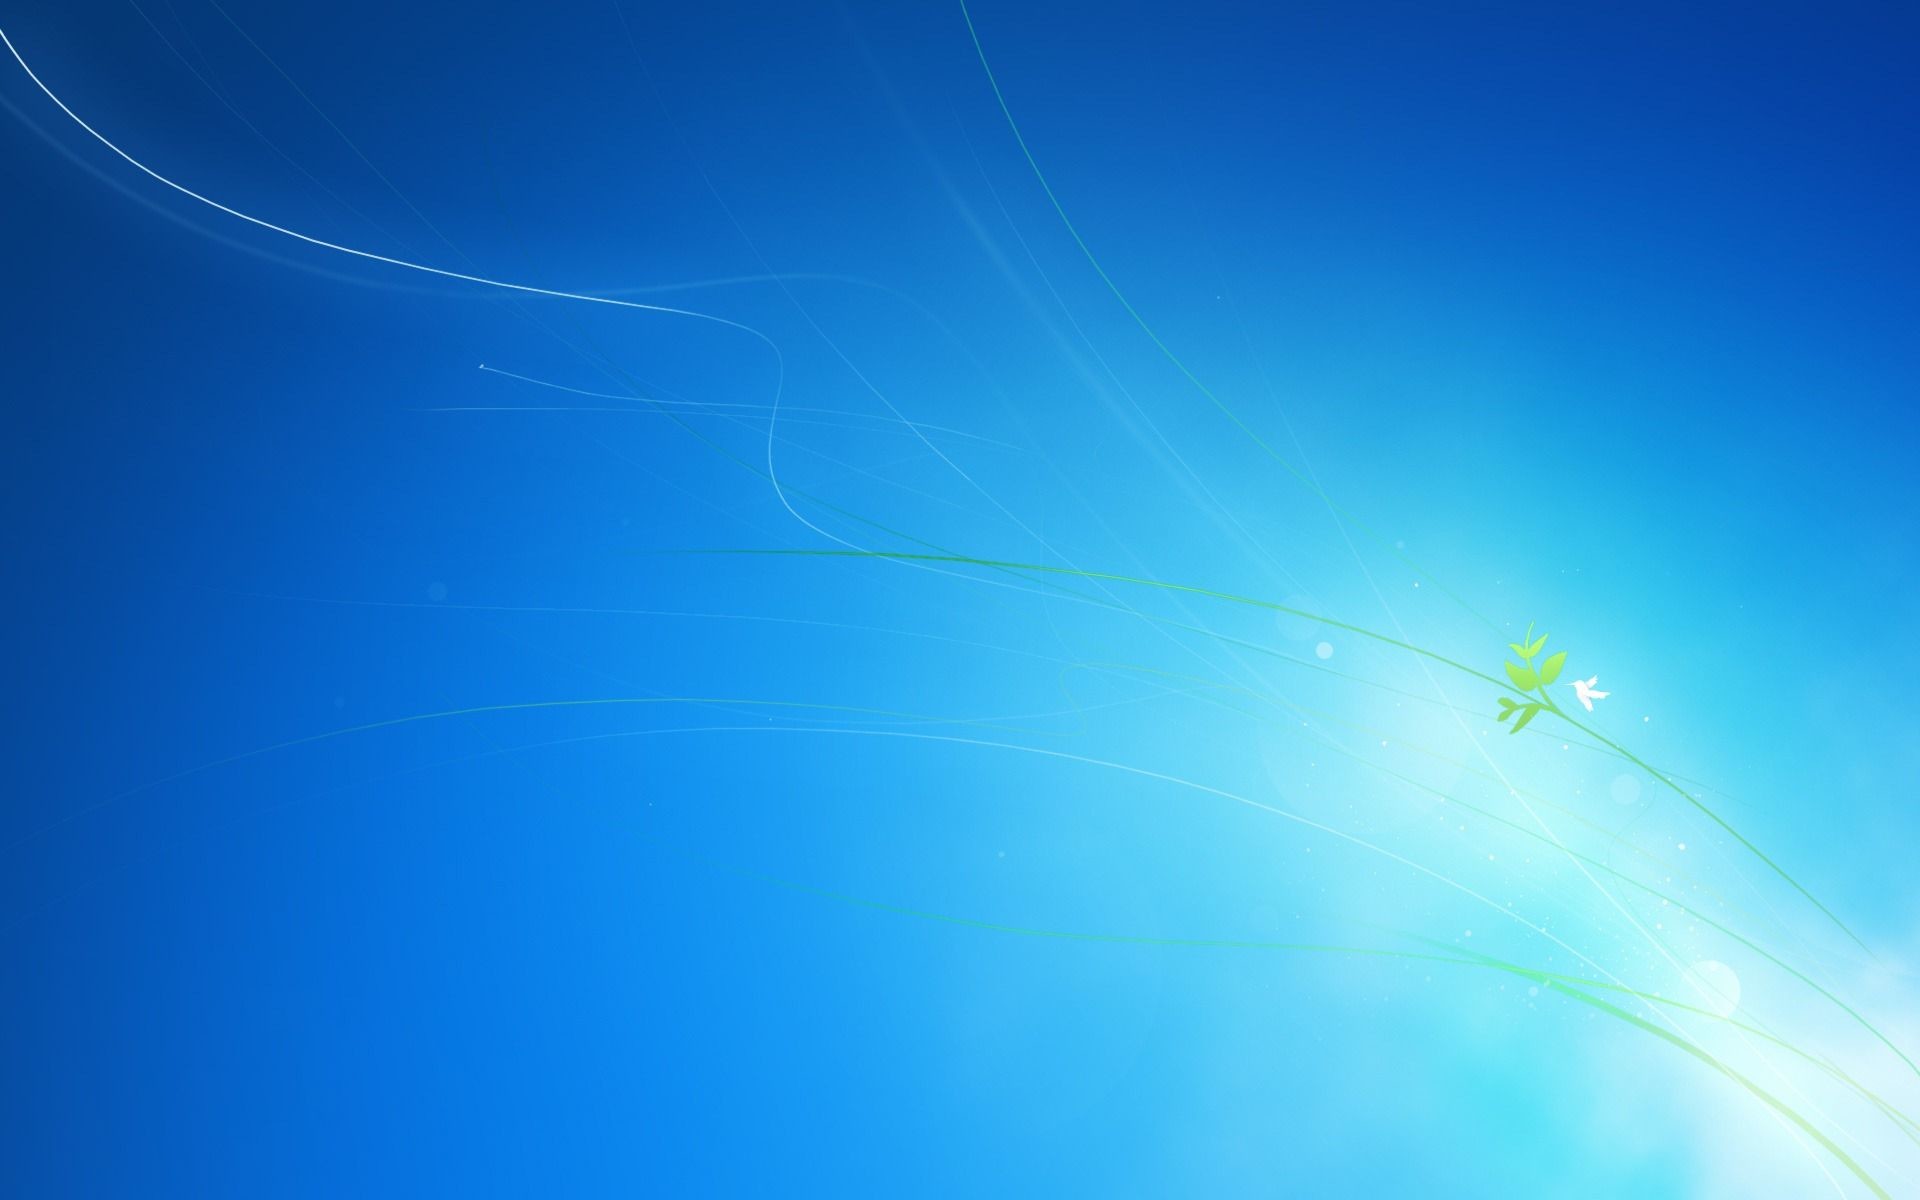 Free download Windows 7 Background Desktop 62 images [1920x1200] for